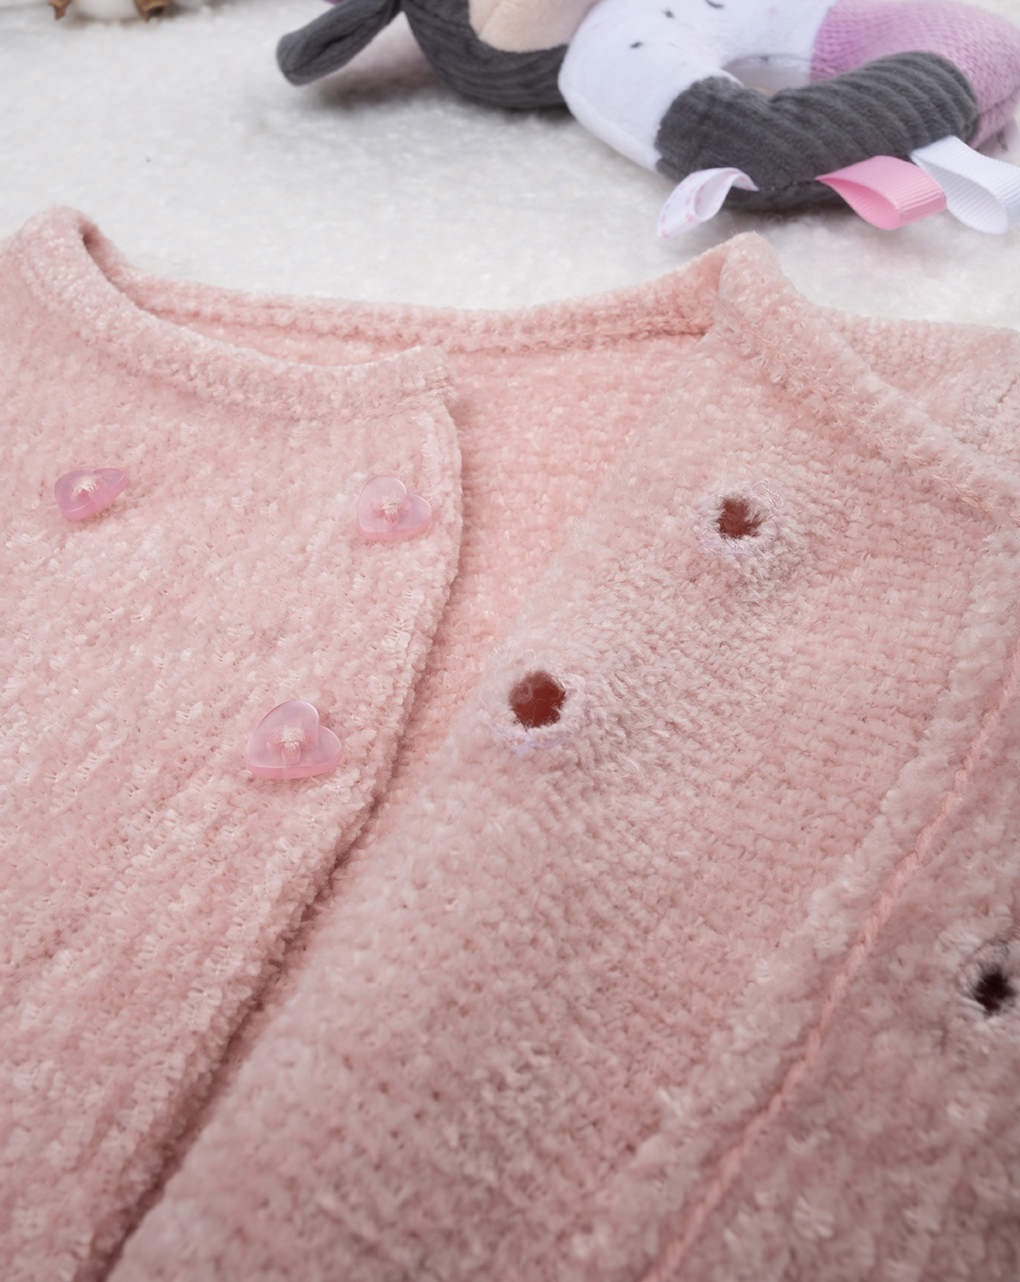 Cardigan tricot bimba rosa - Prénatal